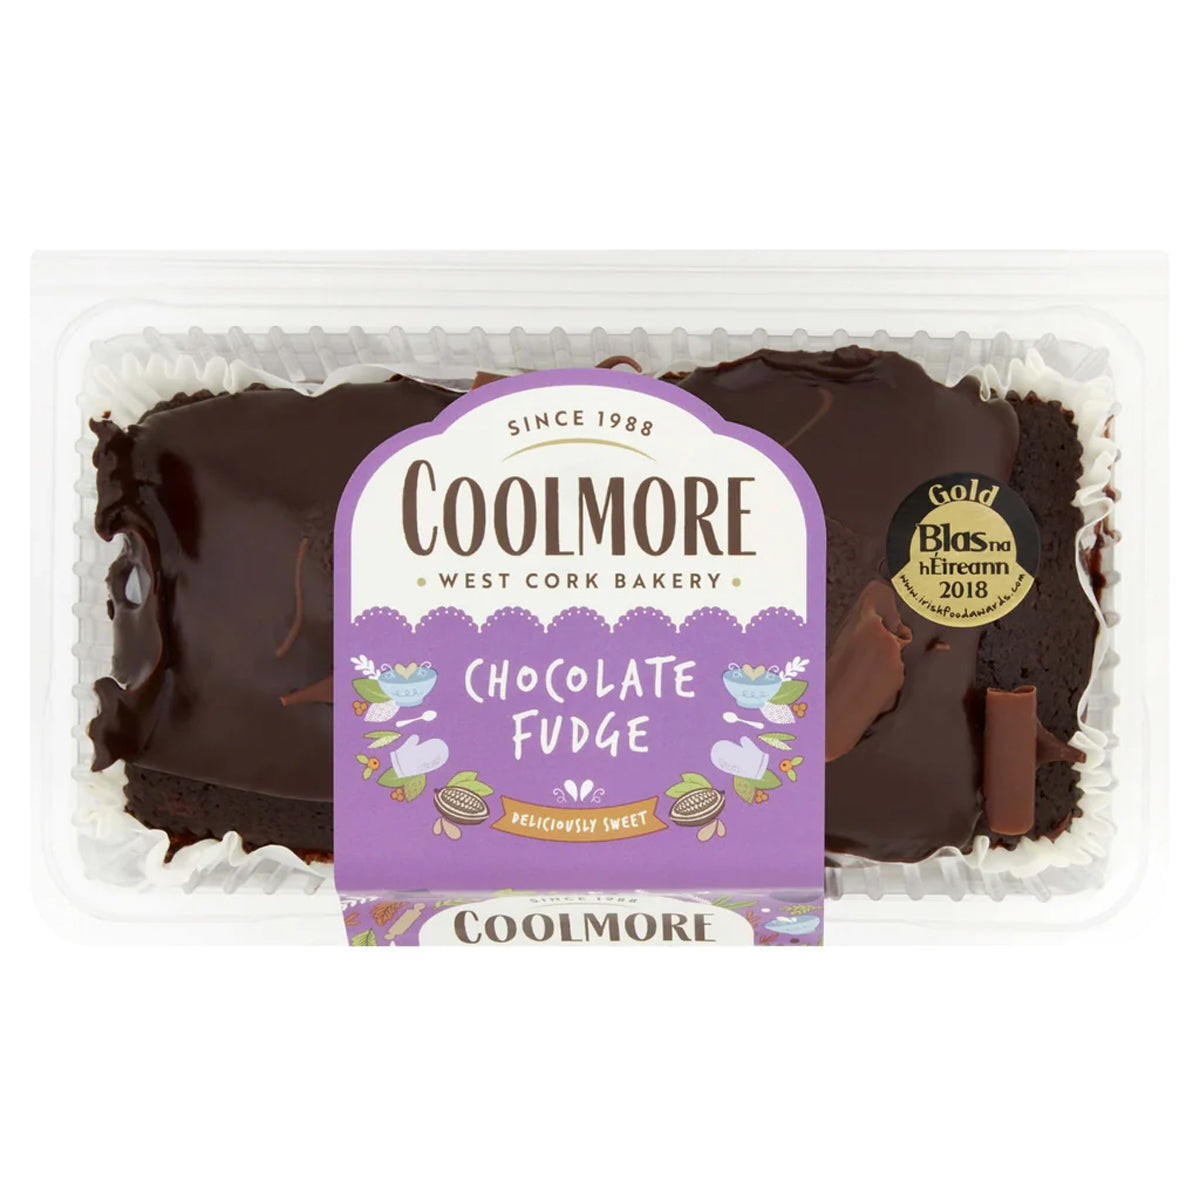 Coolmore Chocolate Fudge Cake in a plastic container.